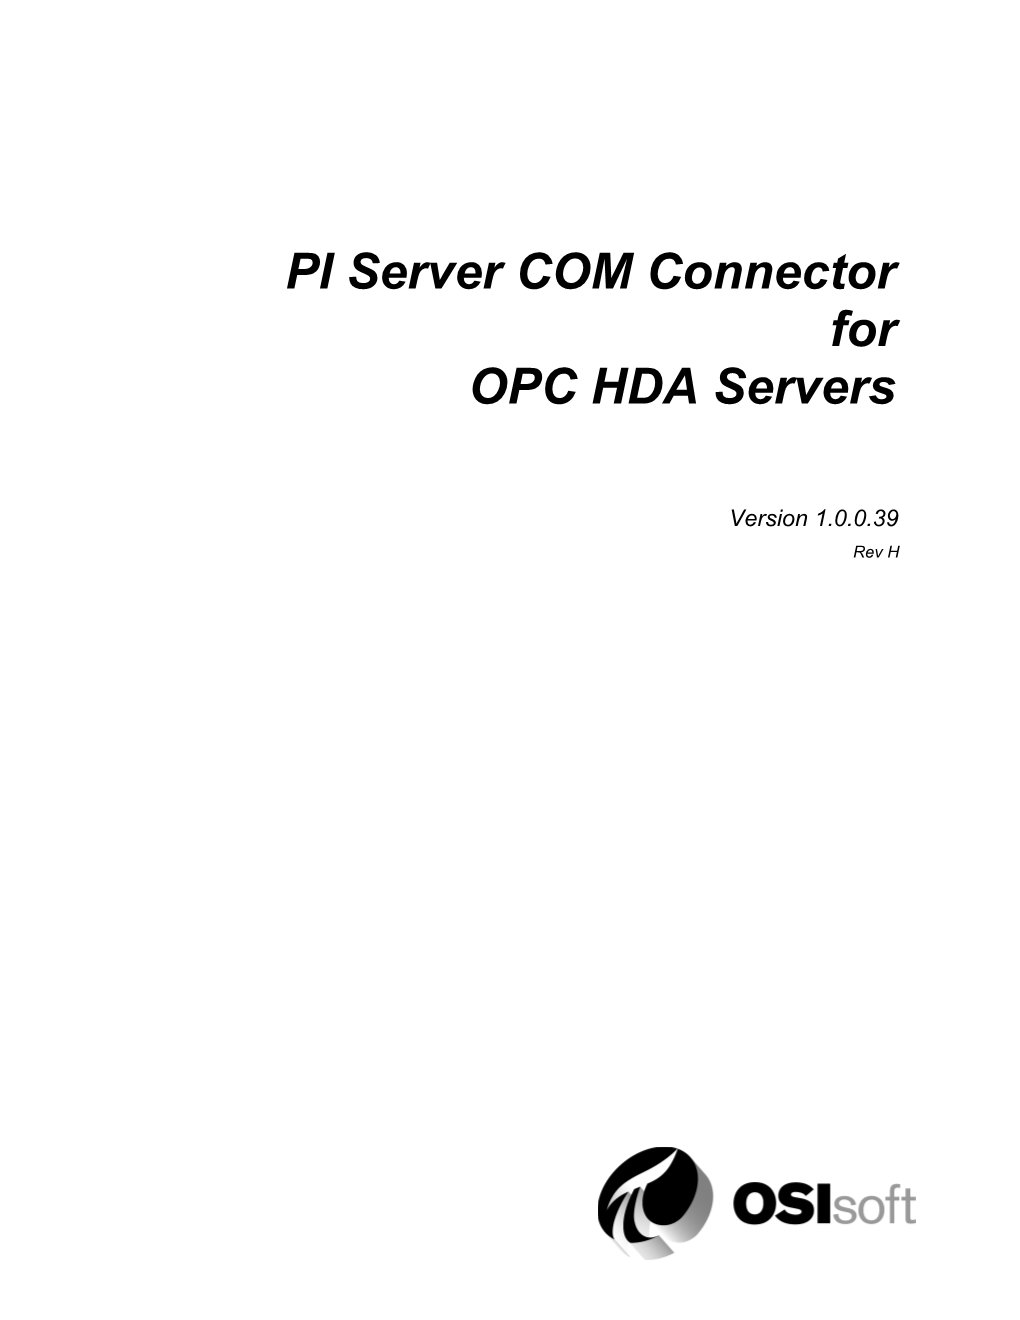 PI OPC HDA COM Connector